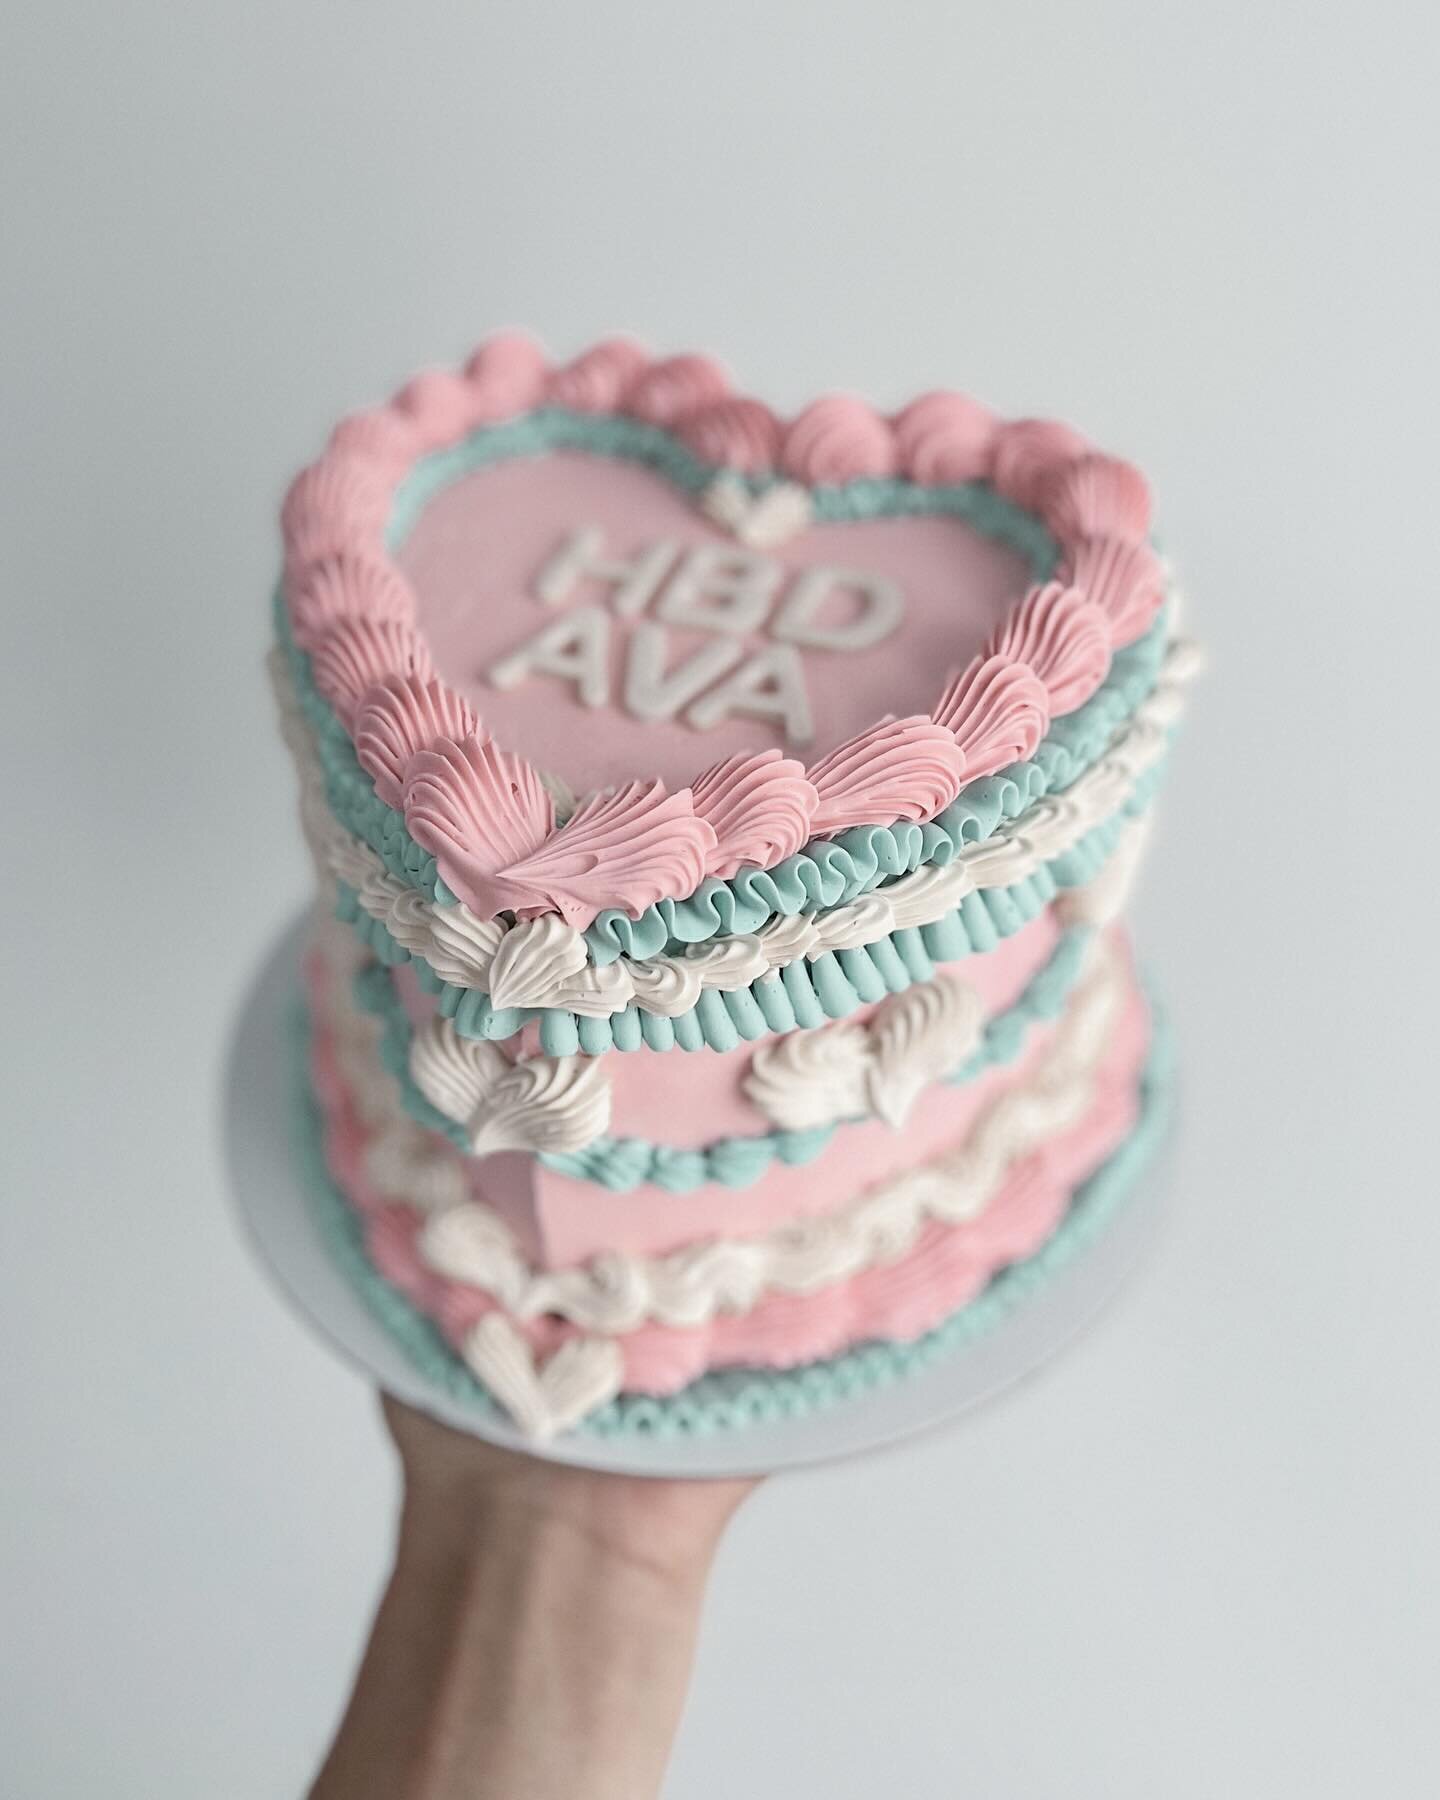 Vintage vibes in the sweetest pastels 😌

#pastelcake #blooooms #forflowerlovers
#cake #blooooms #forflowerlovers #dailydoseofcolour #cakedecorating #pastelart #pastelaesthetic #cakeporm #whimsicalcake #psimadethis #foodphotography #cakeinspo #ilovec